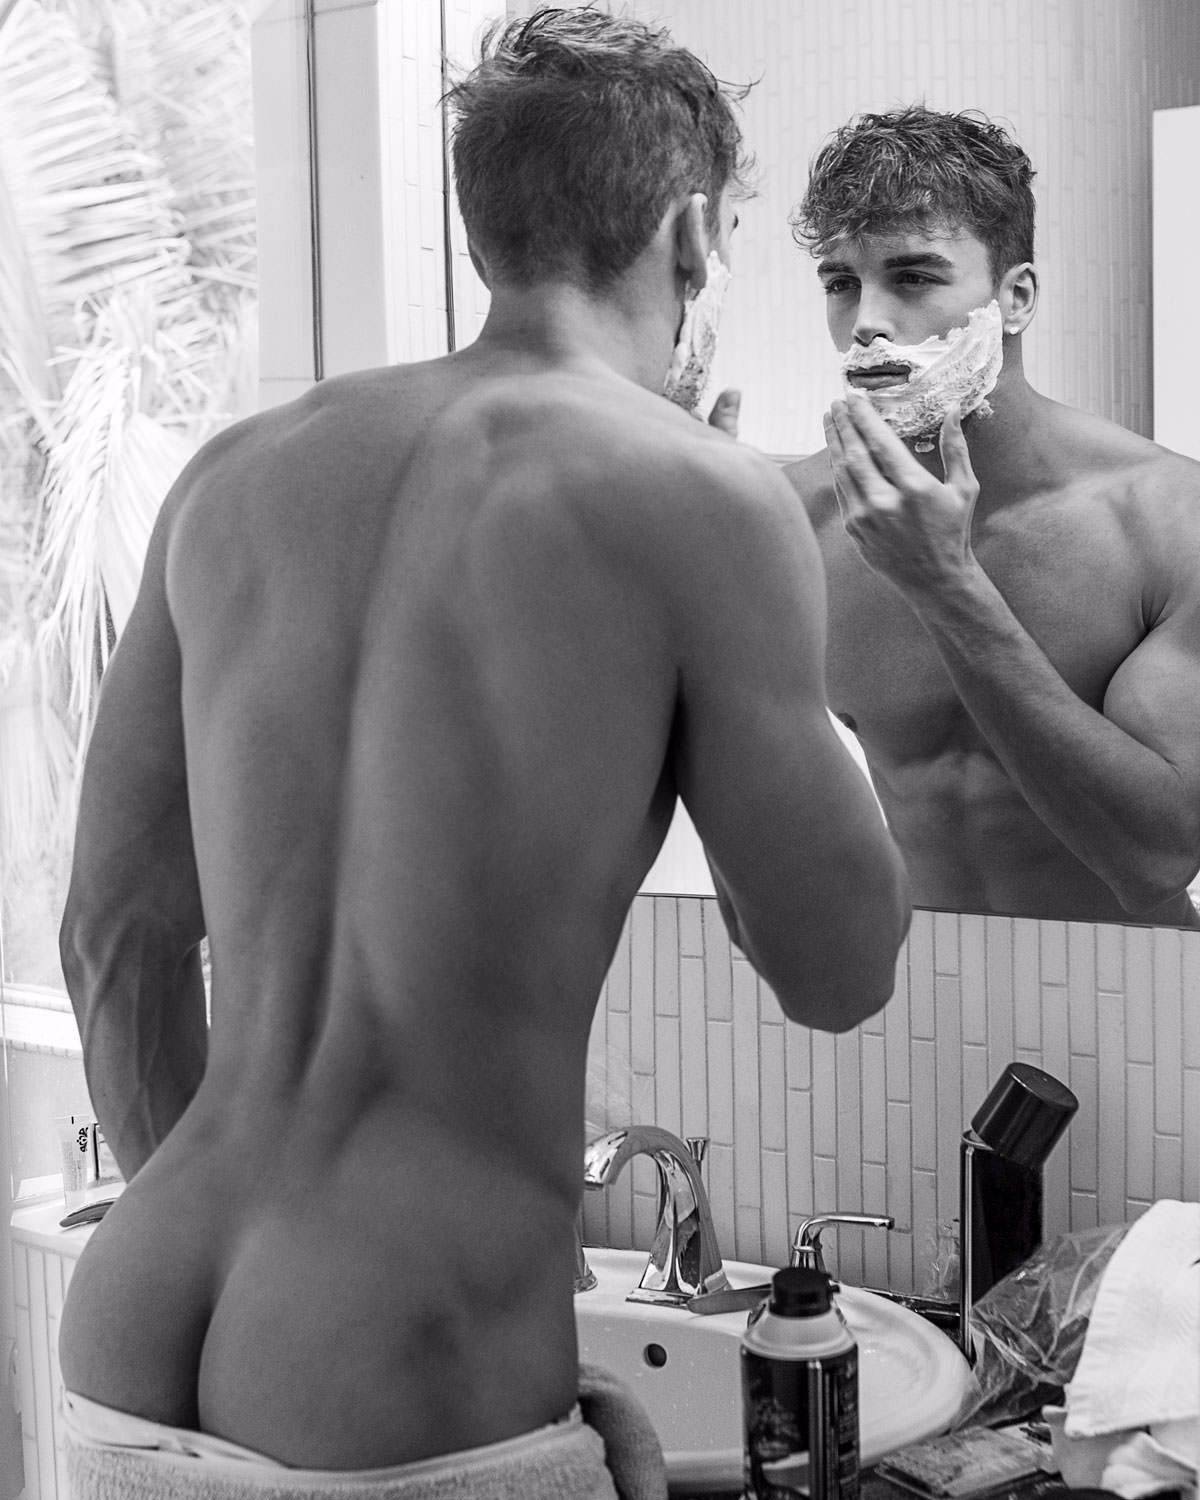 dimagornovskyi: I always get my best ideas while shaving 👱🏼 Male model Dima